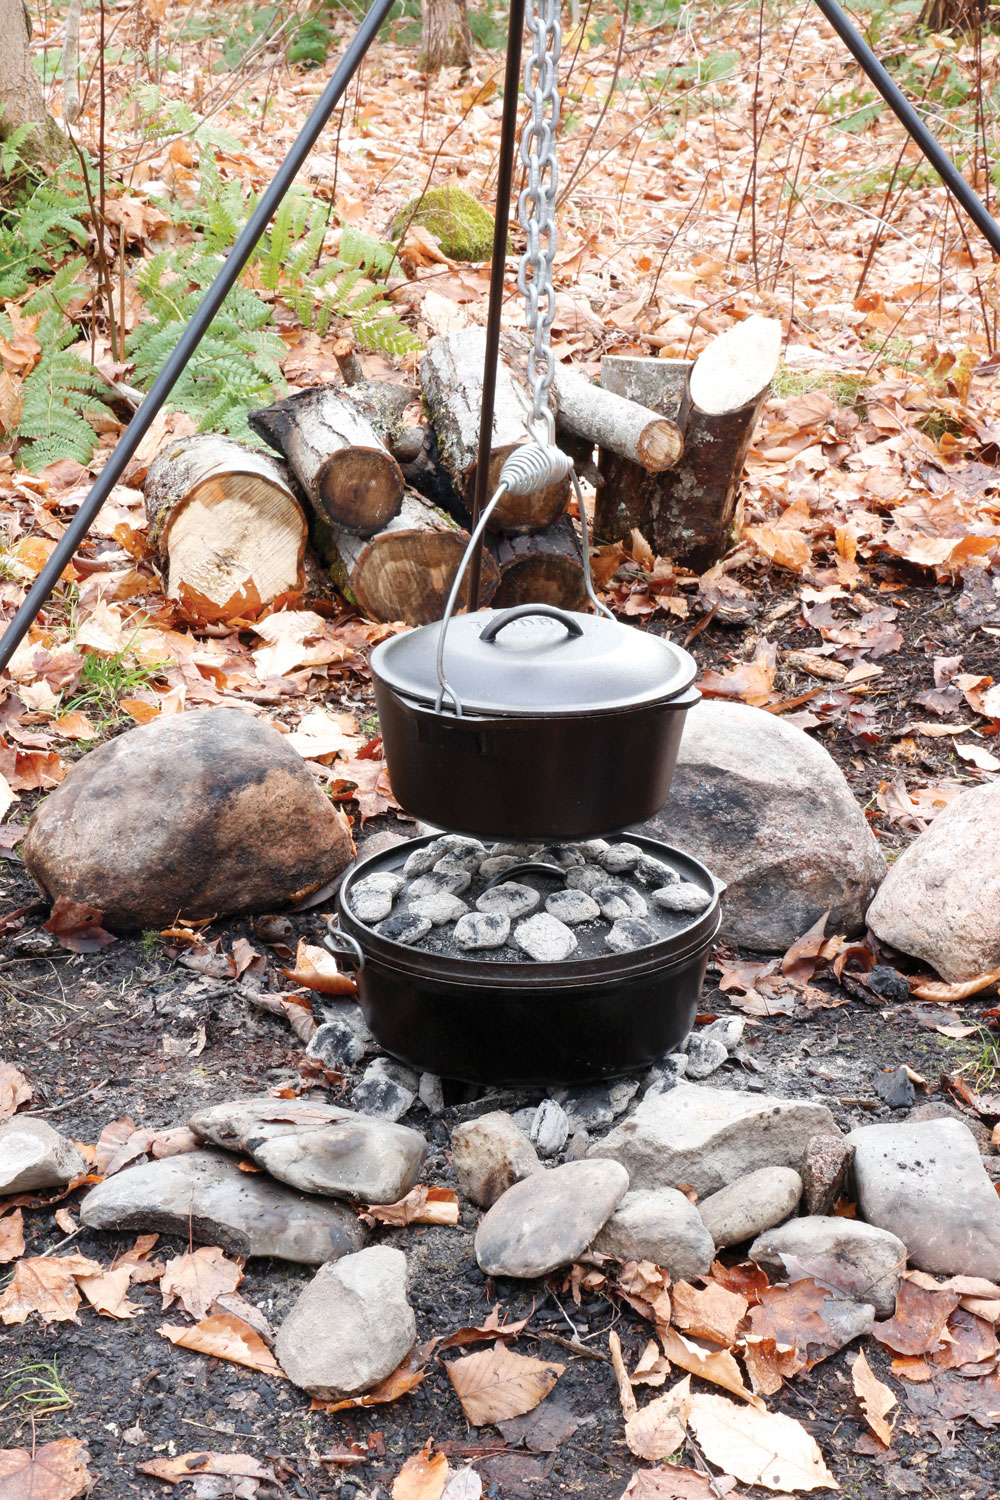 A dutch oven is the ideal campsite cuisine preparation method.